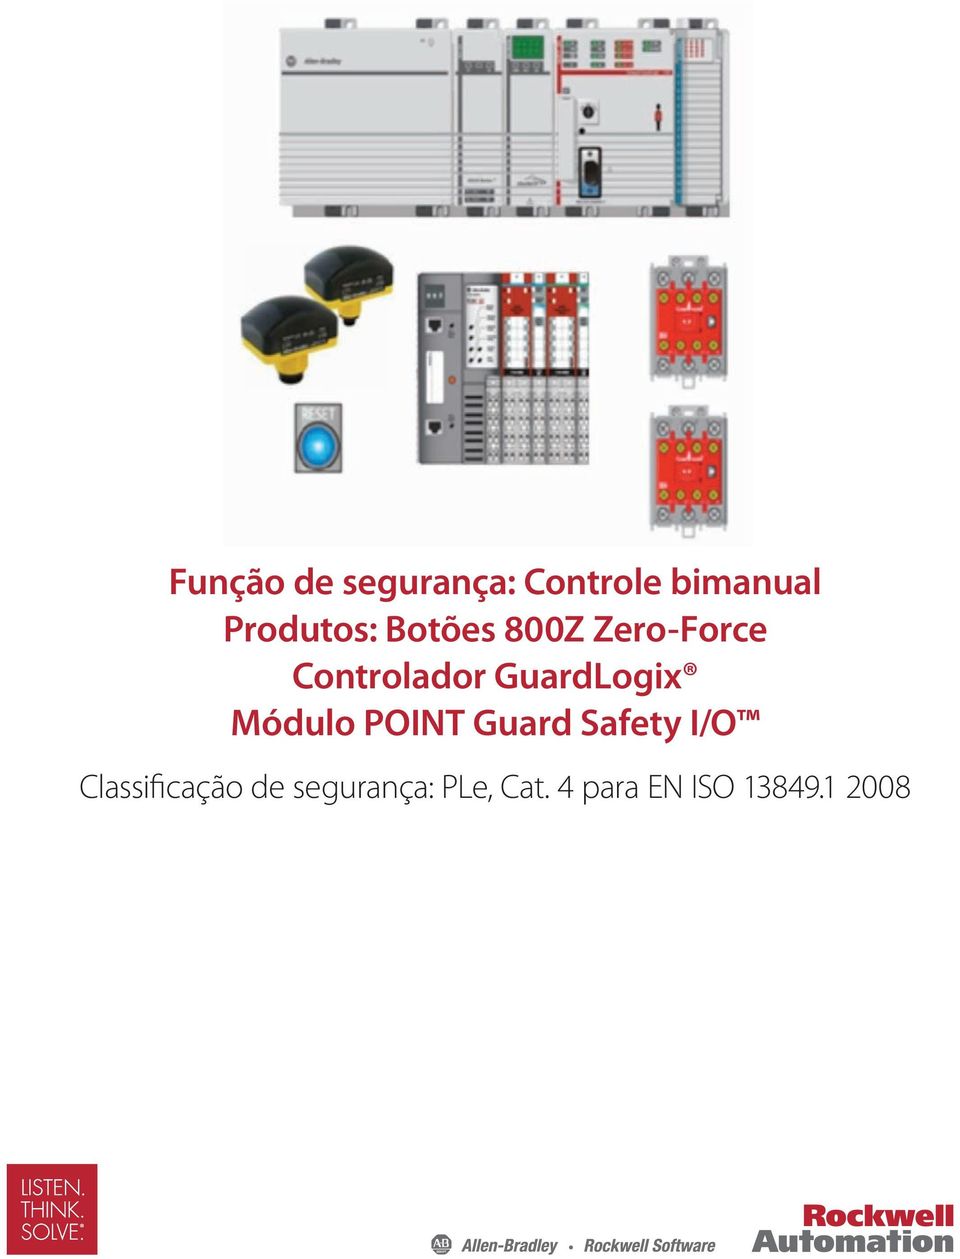 GuardLogix Módulo POINT Guard Safety I/O